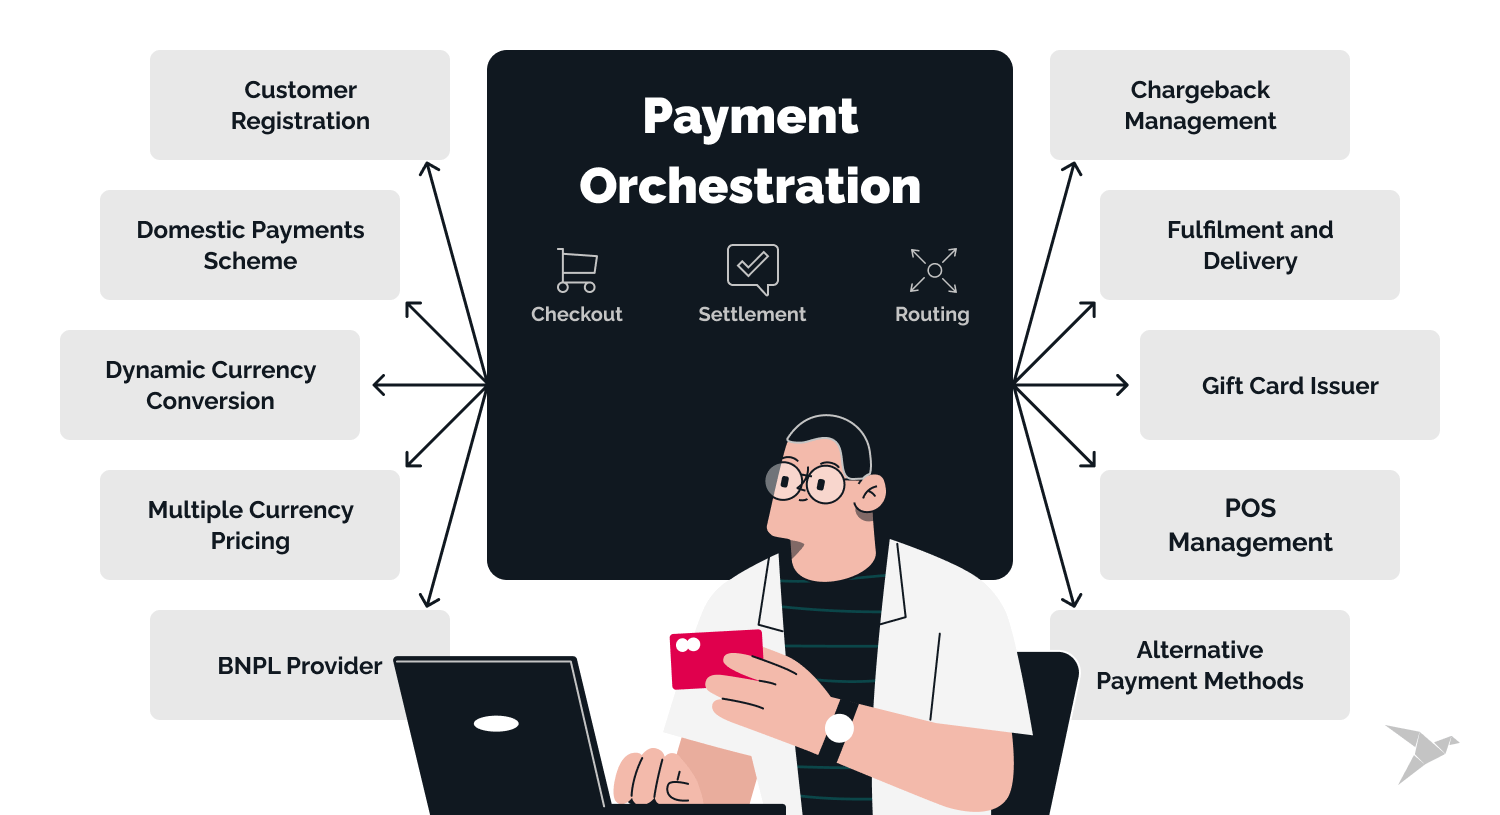 payment orchestration platform